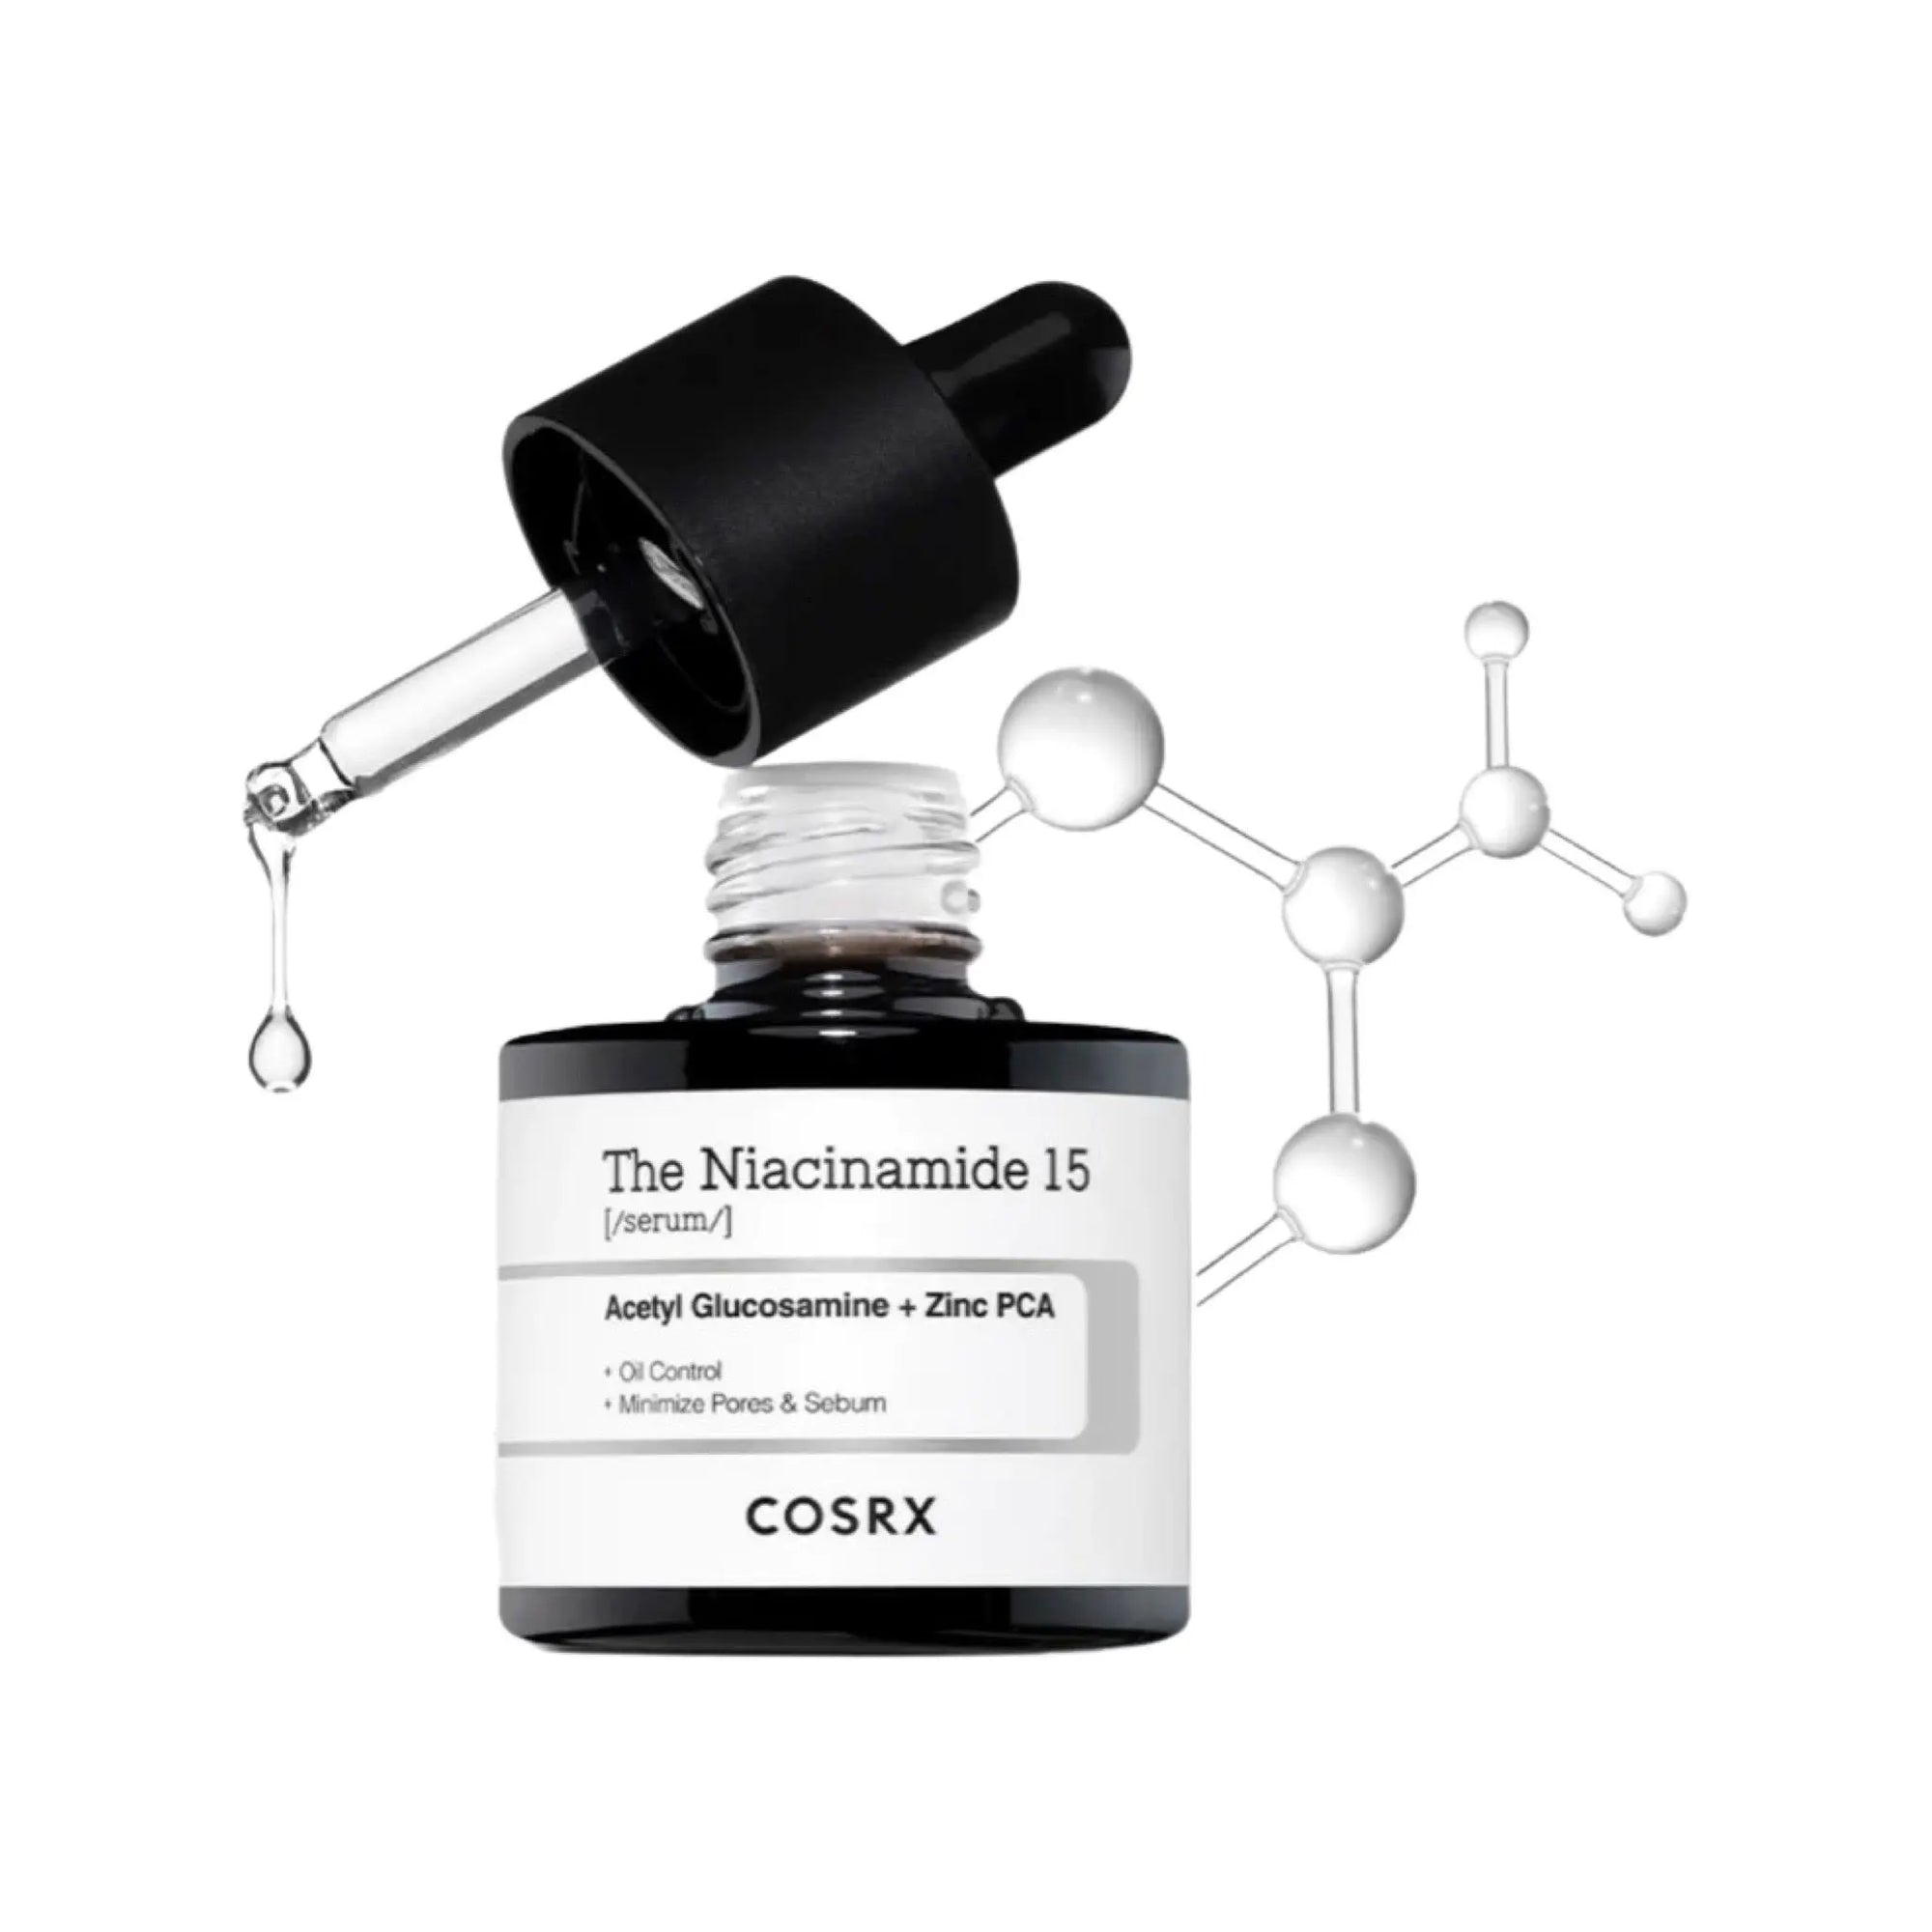 COSRX - The Niacinamide 15 Serum 20g COSRX